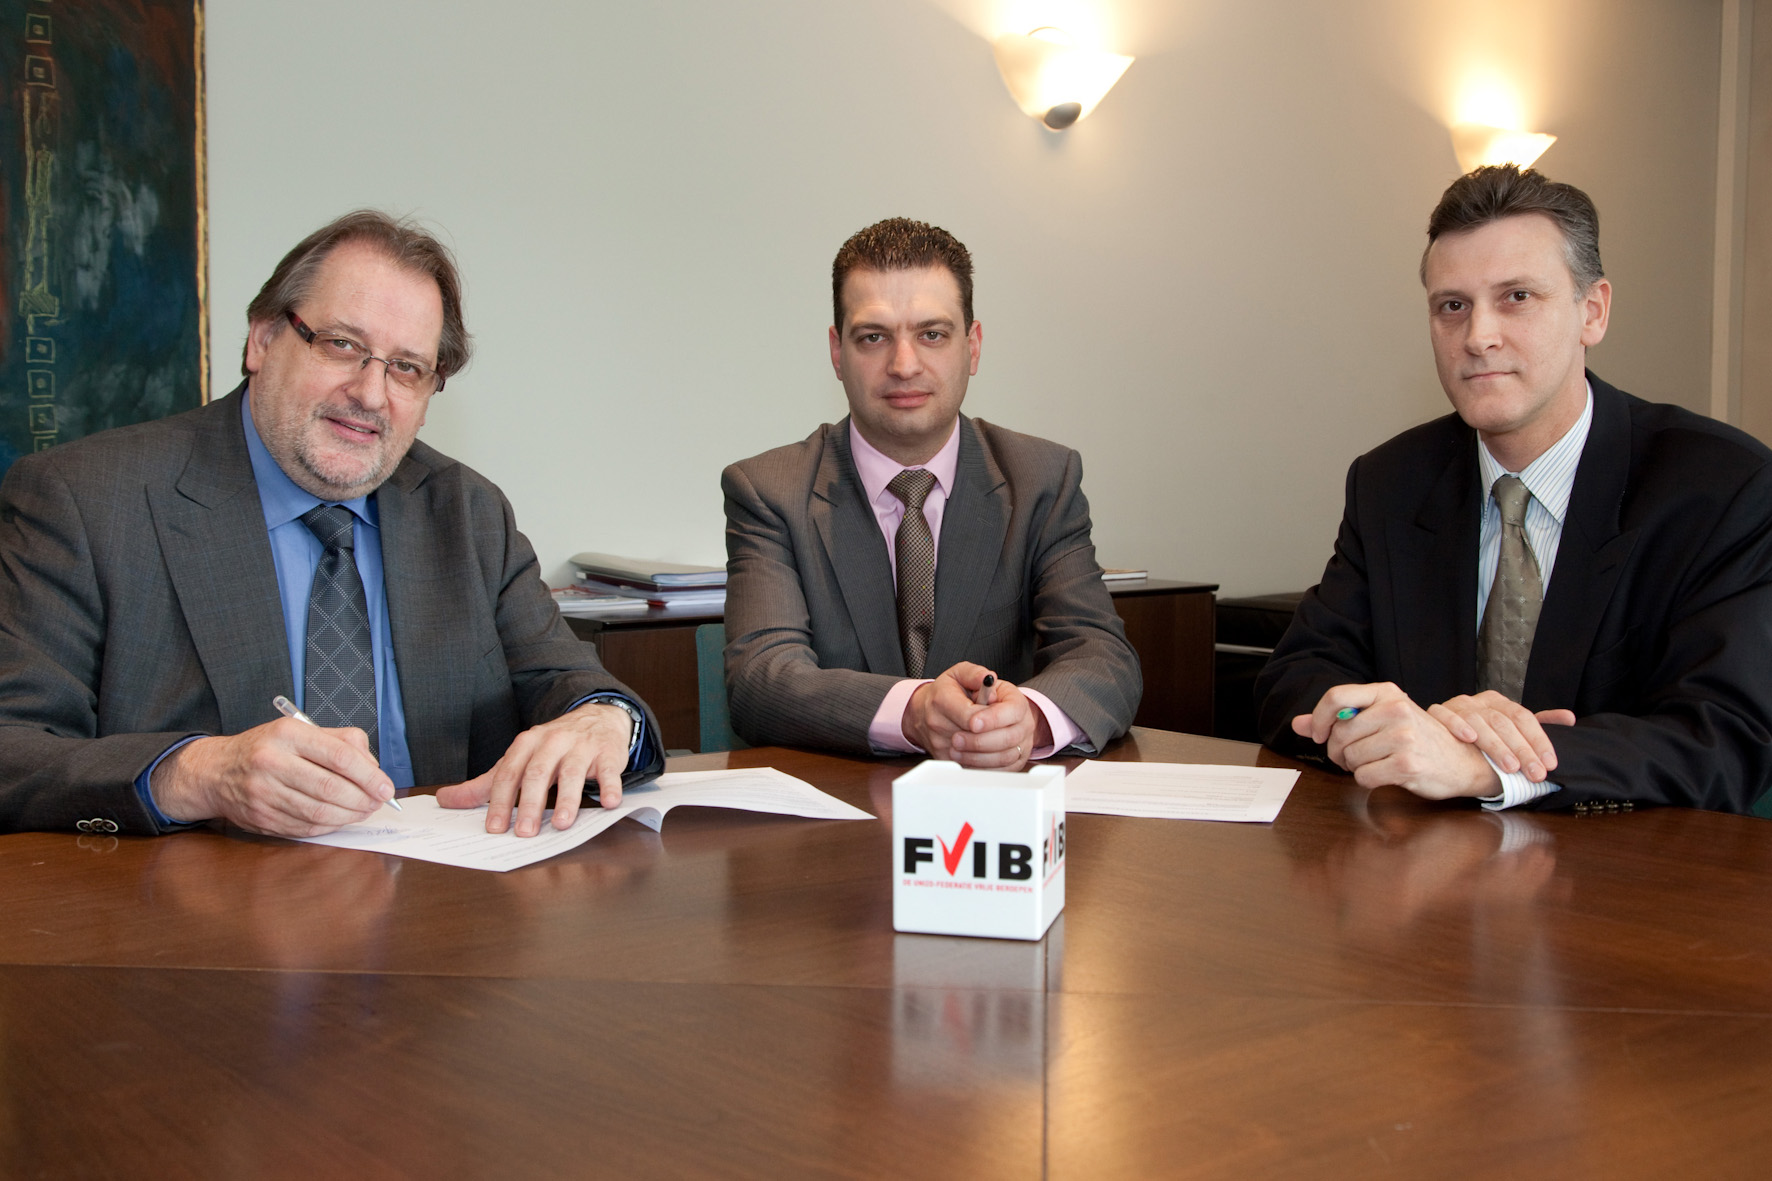 100325 samenwerkingsovereenkomst FVIB-AXXON Jan Sap, Stefaan Pieters en Michel Schotte-foto Luk Collet-7229